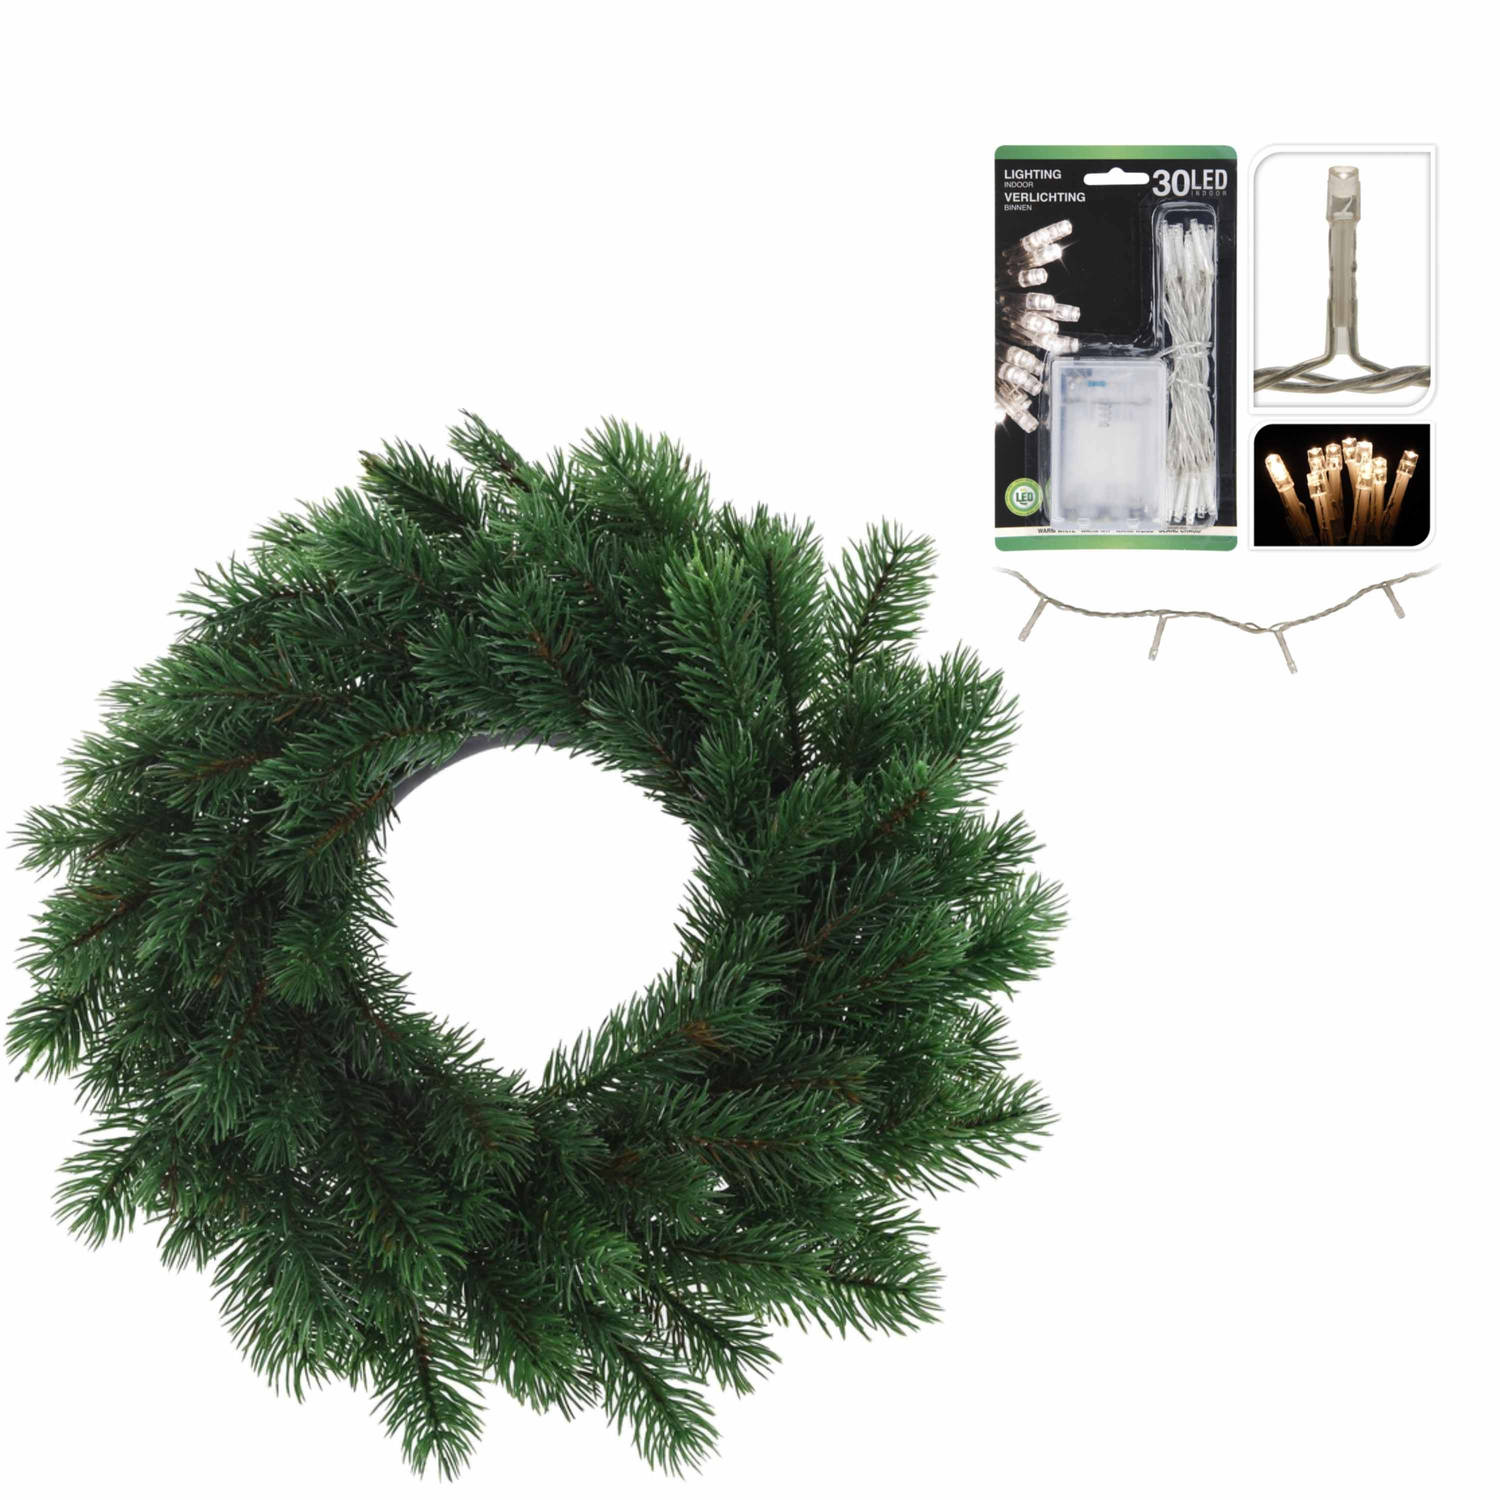 Dennenkrans-deurkrans 35 cm inclusief warm witte kerstverlichting Kerstkransen